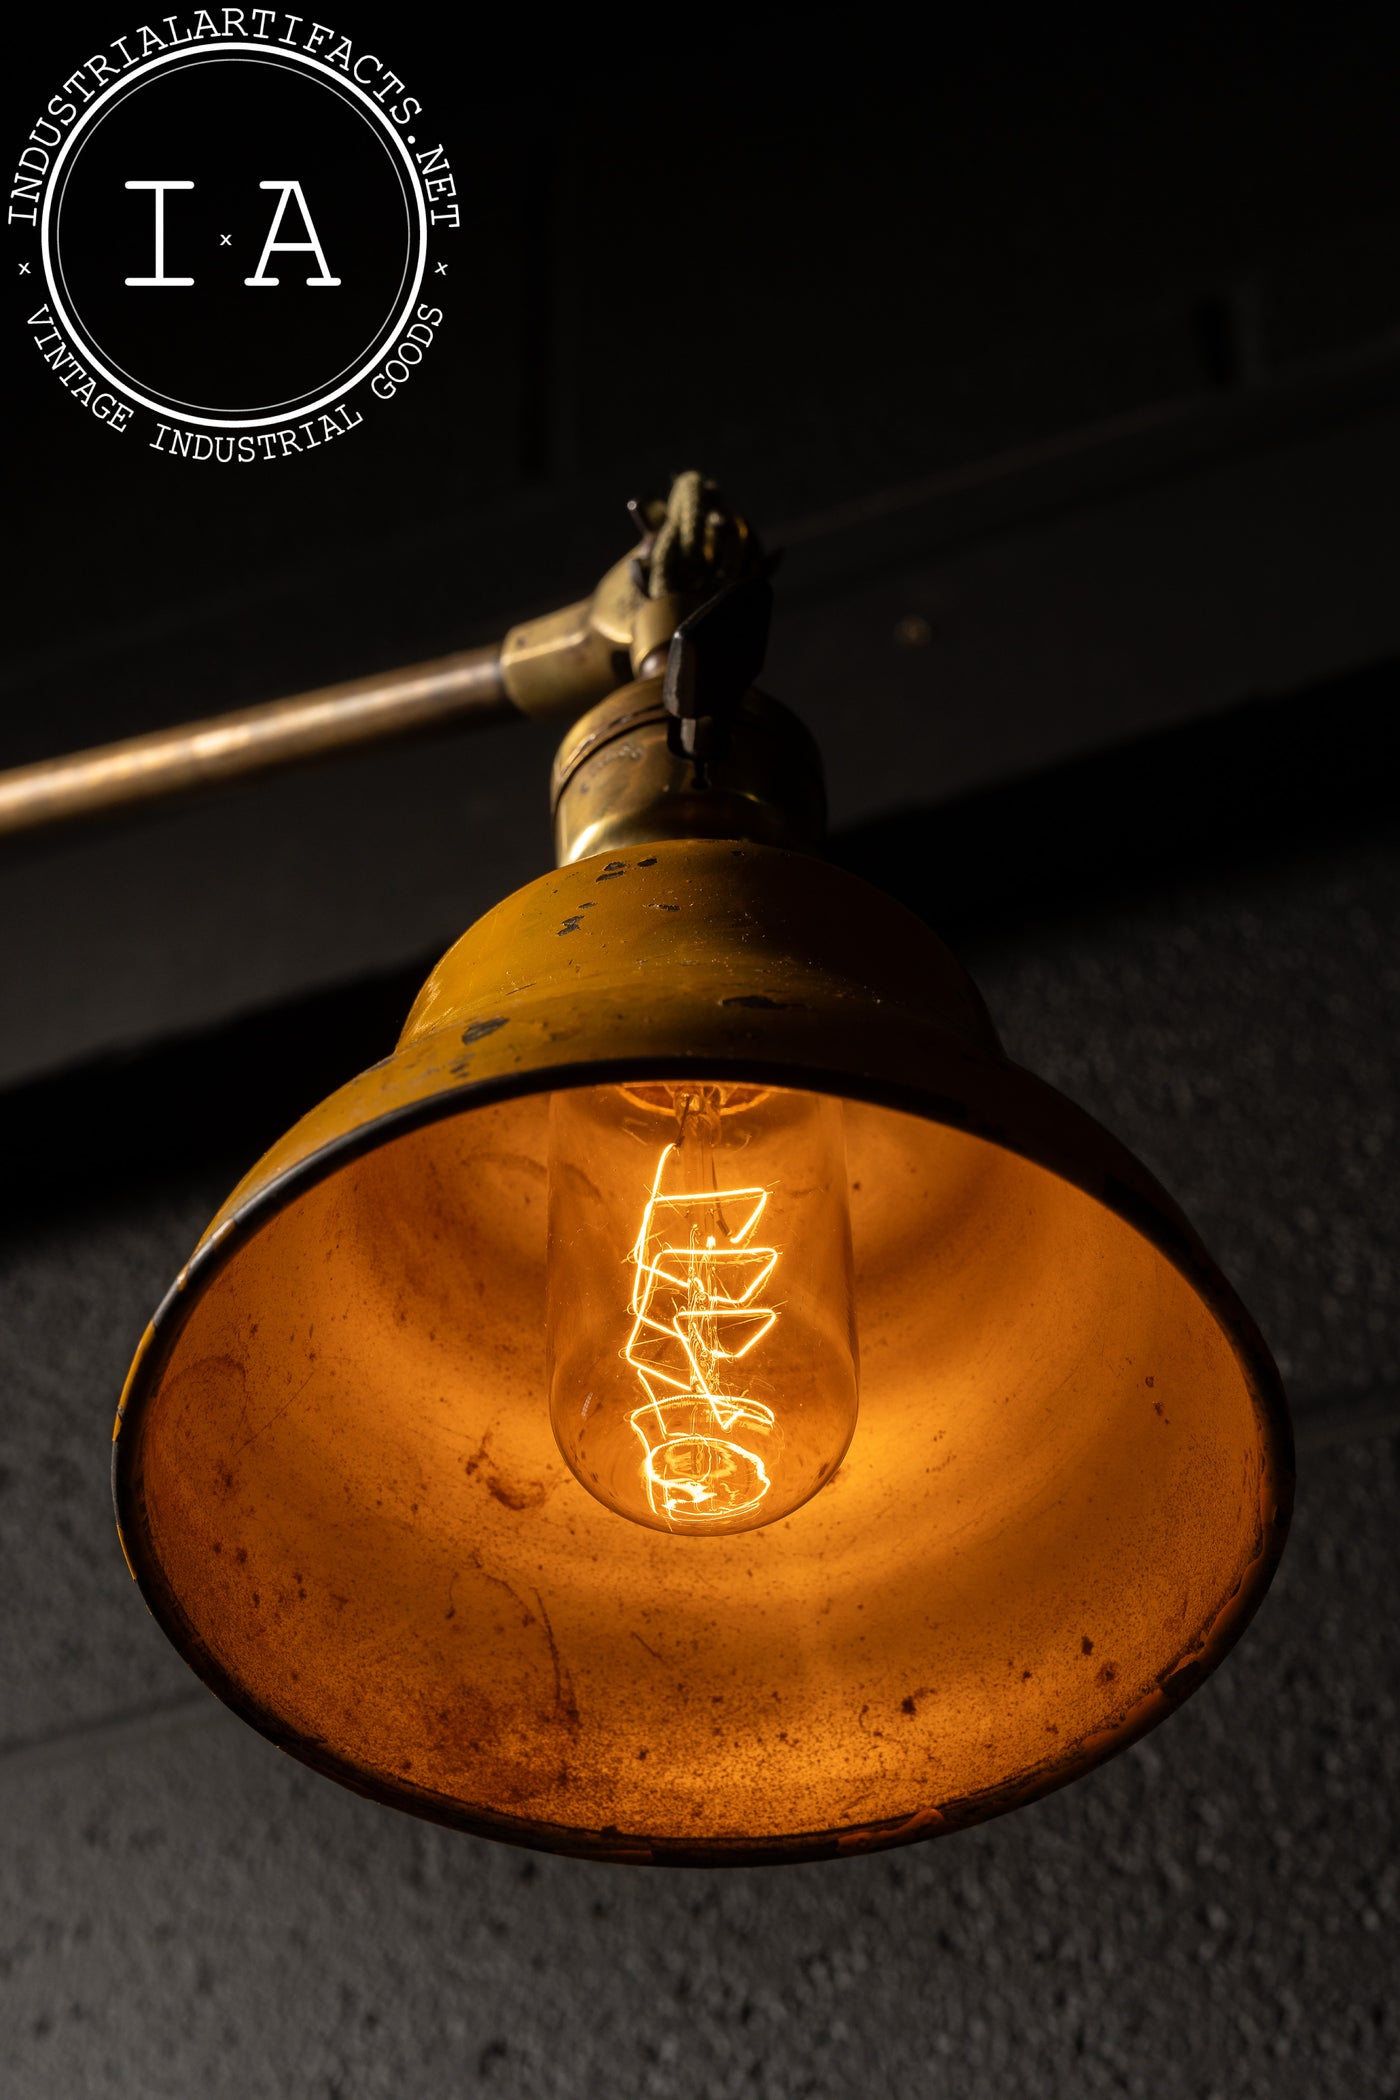 Antique O.C. White Task Lamp